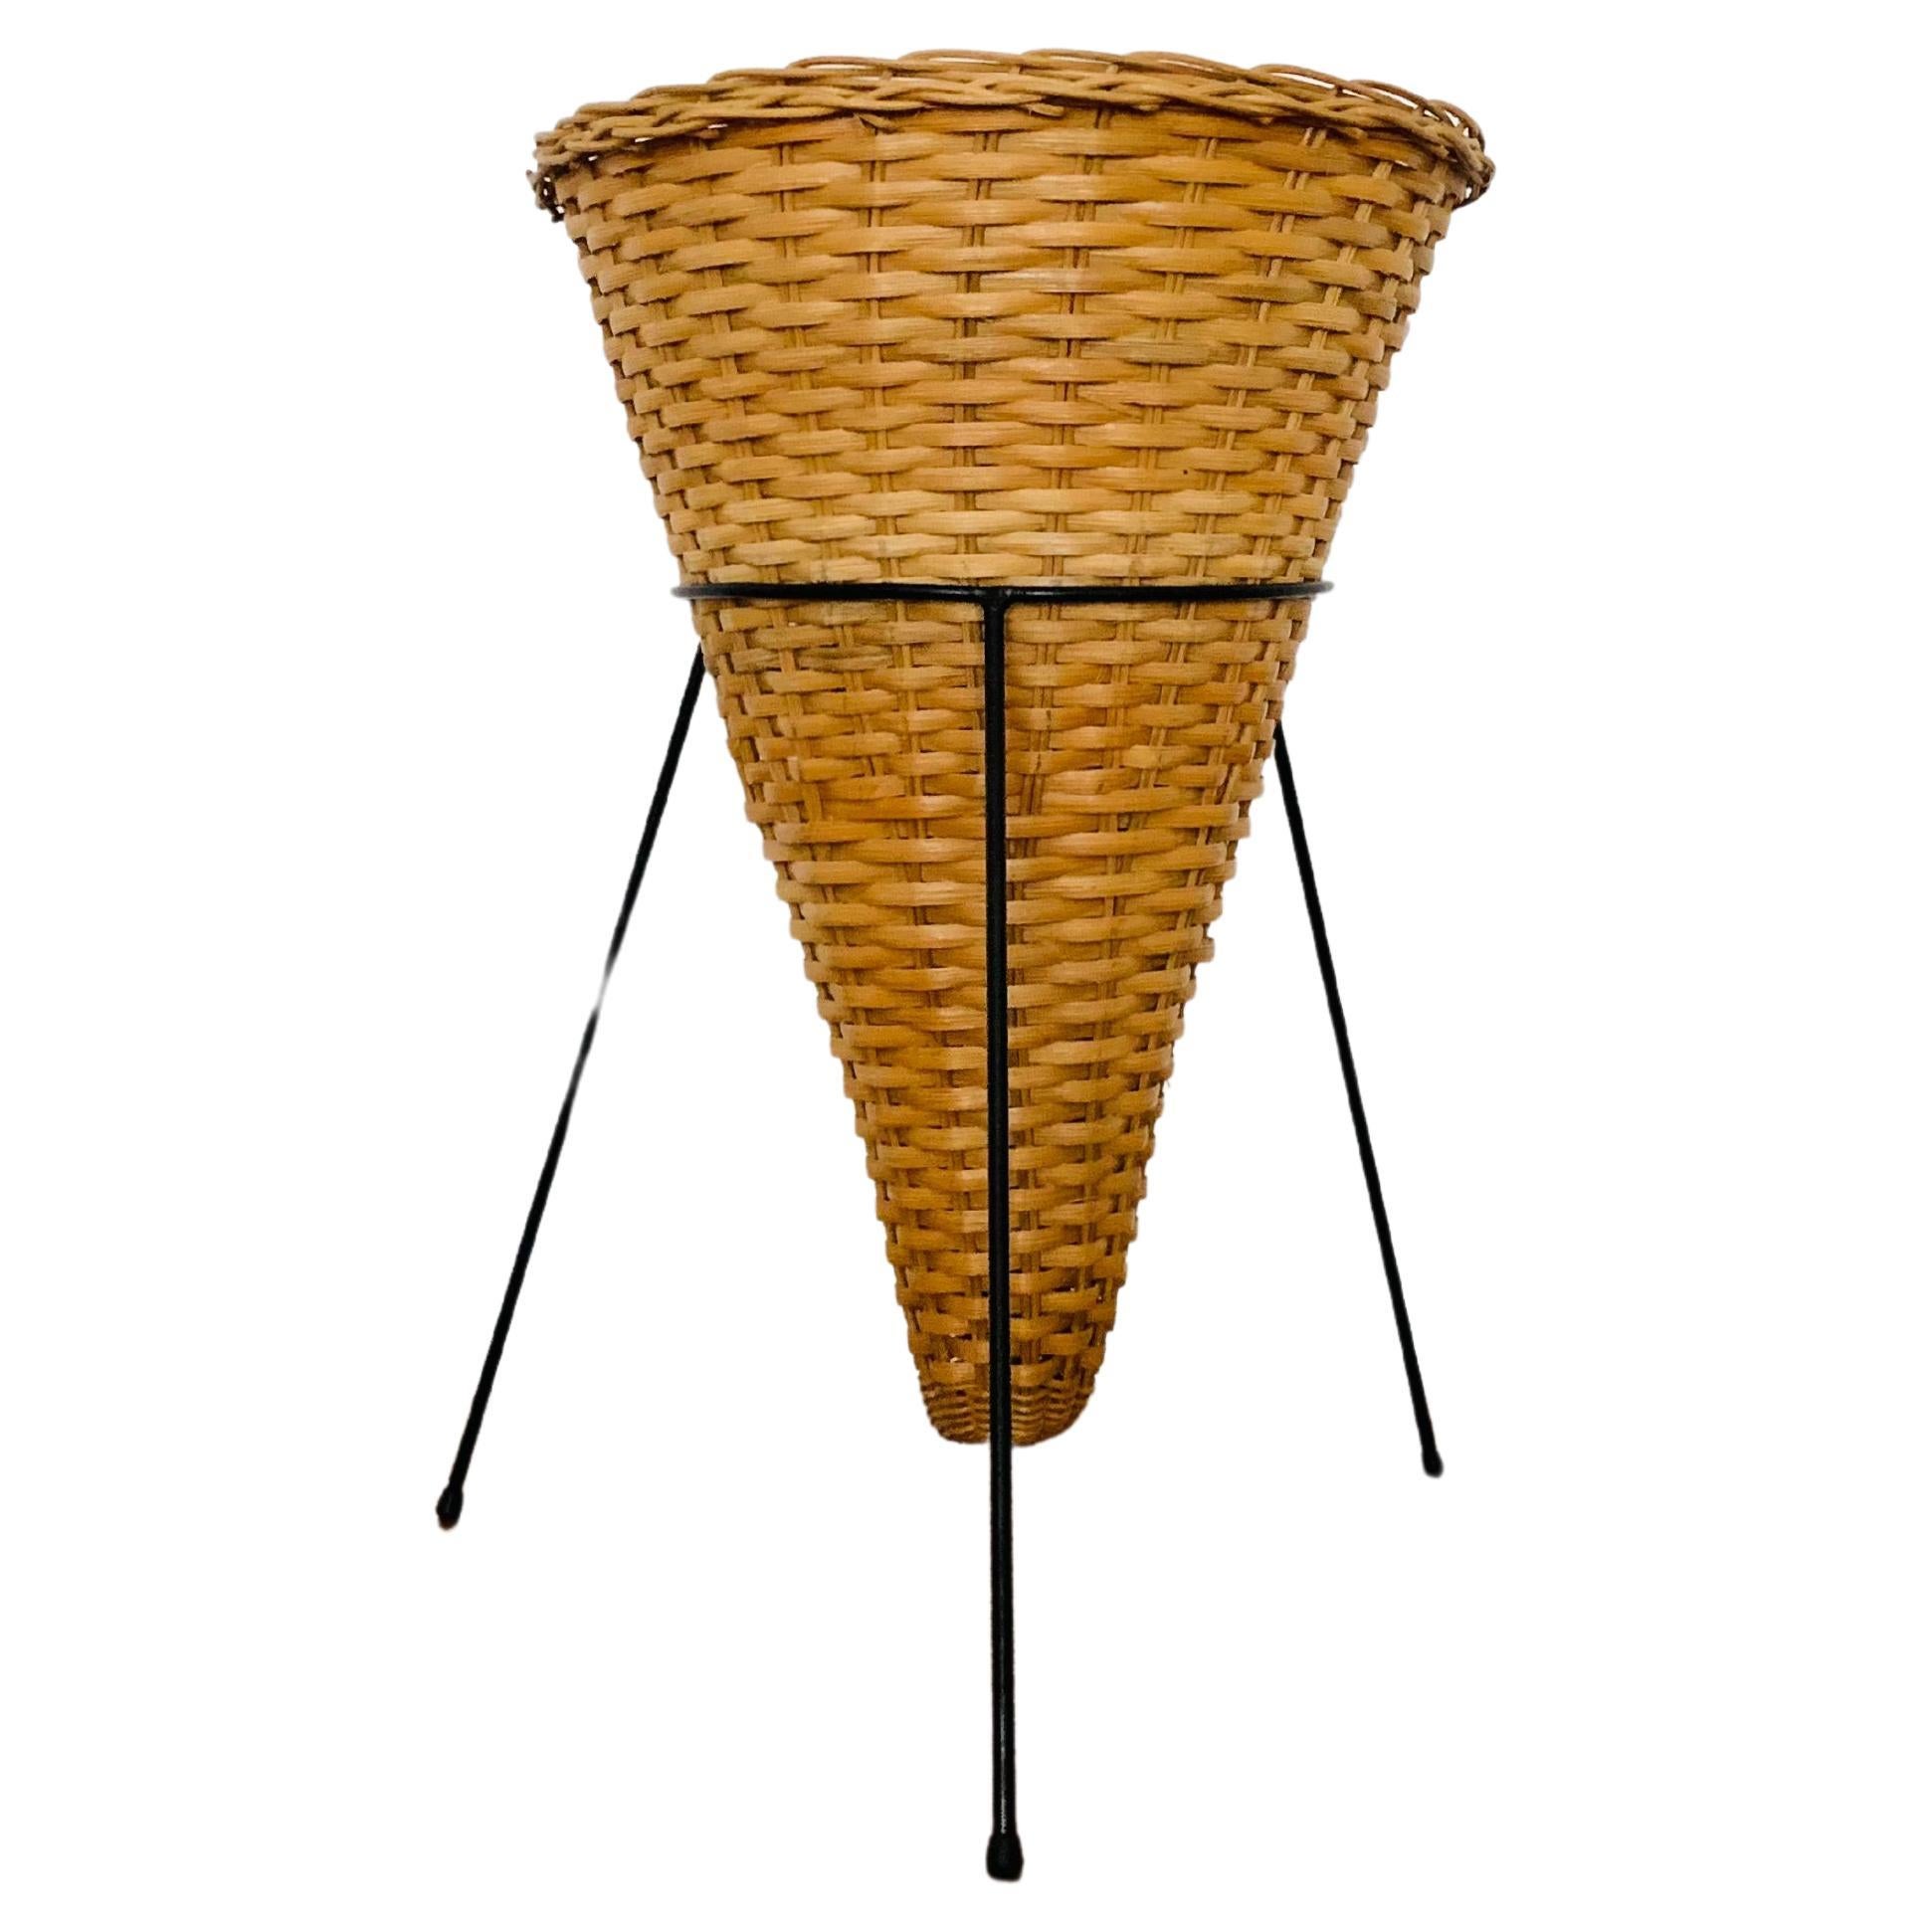 Wastepaper Basket or Wicker Planter For Sale